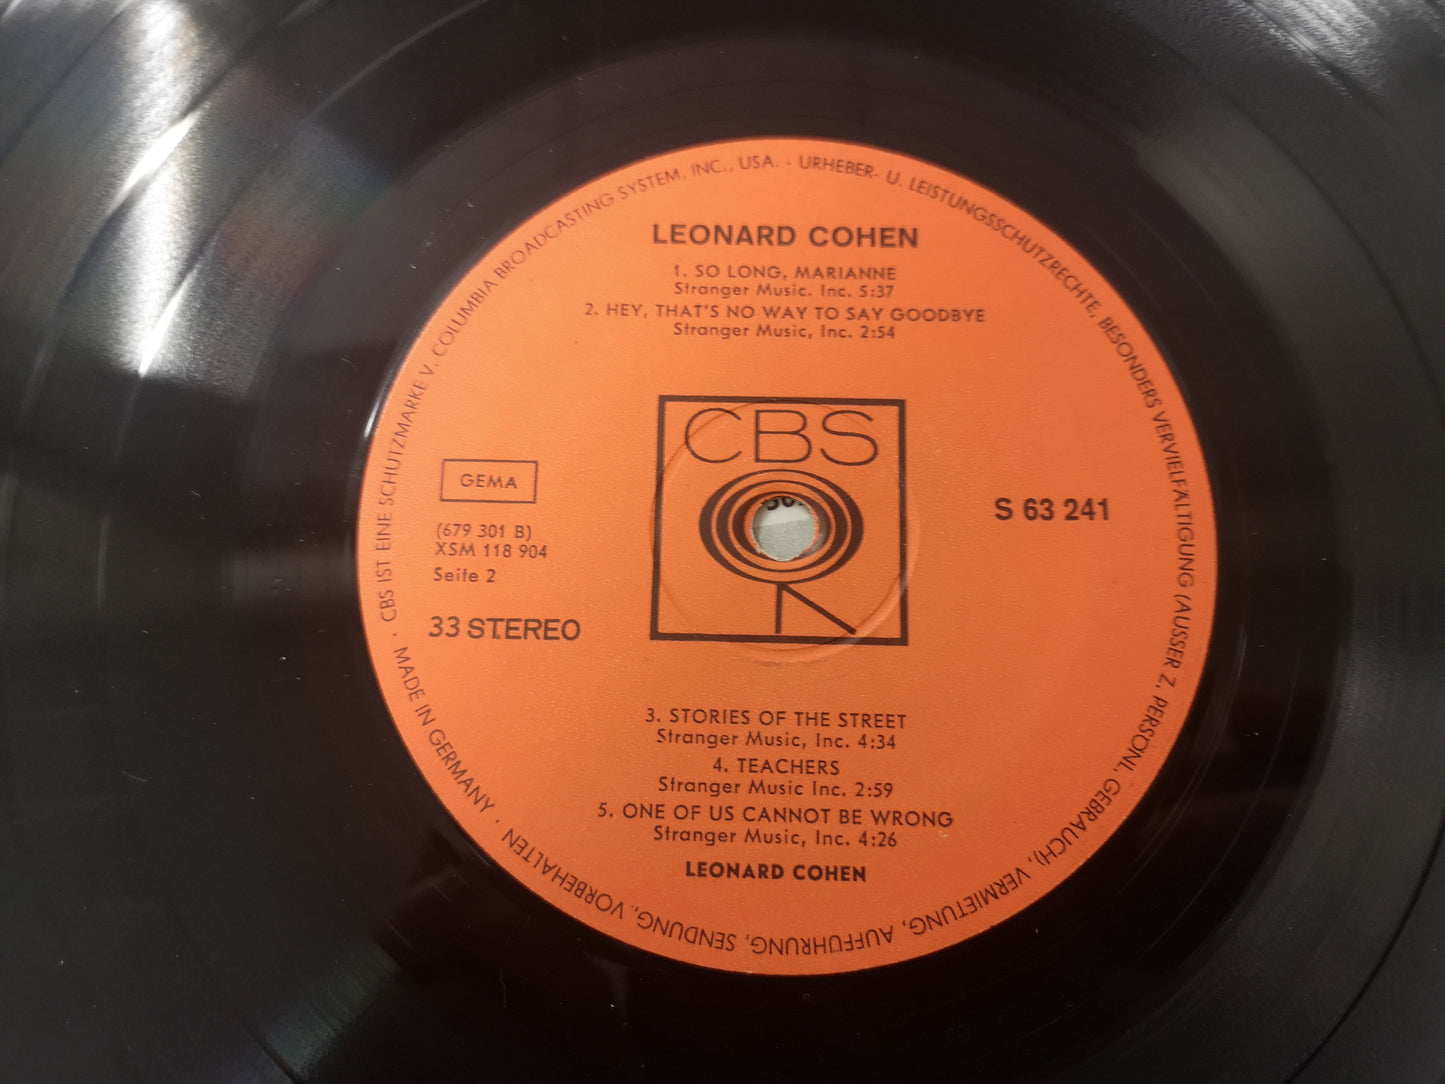 Leonard Cohen "Songs of" Orig Germany 1968 VG+/EX